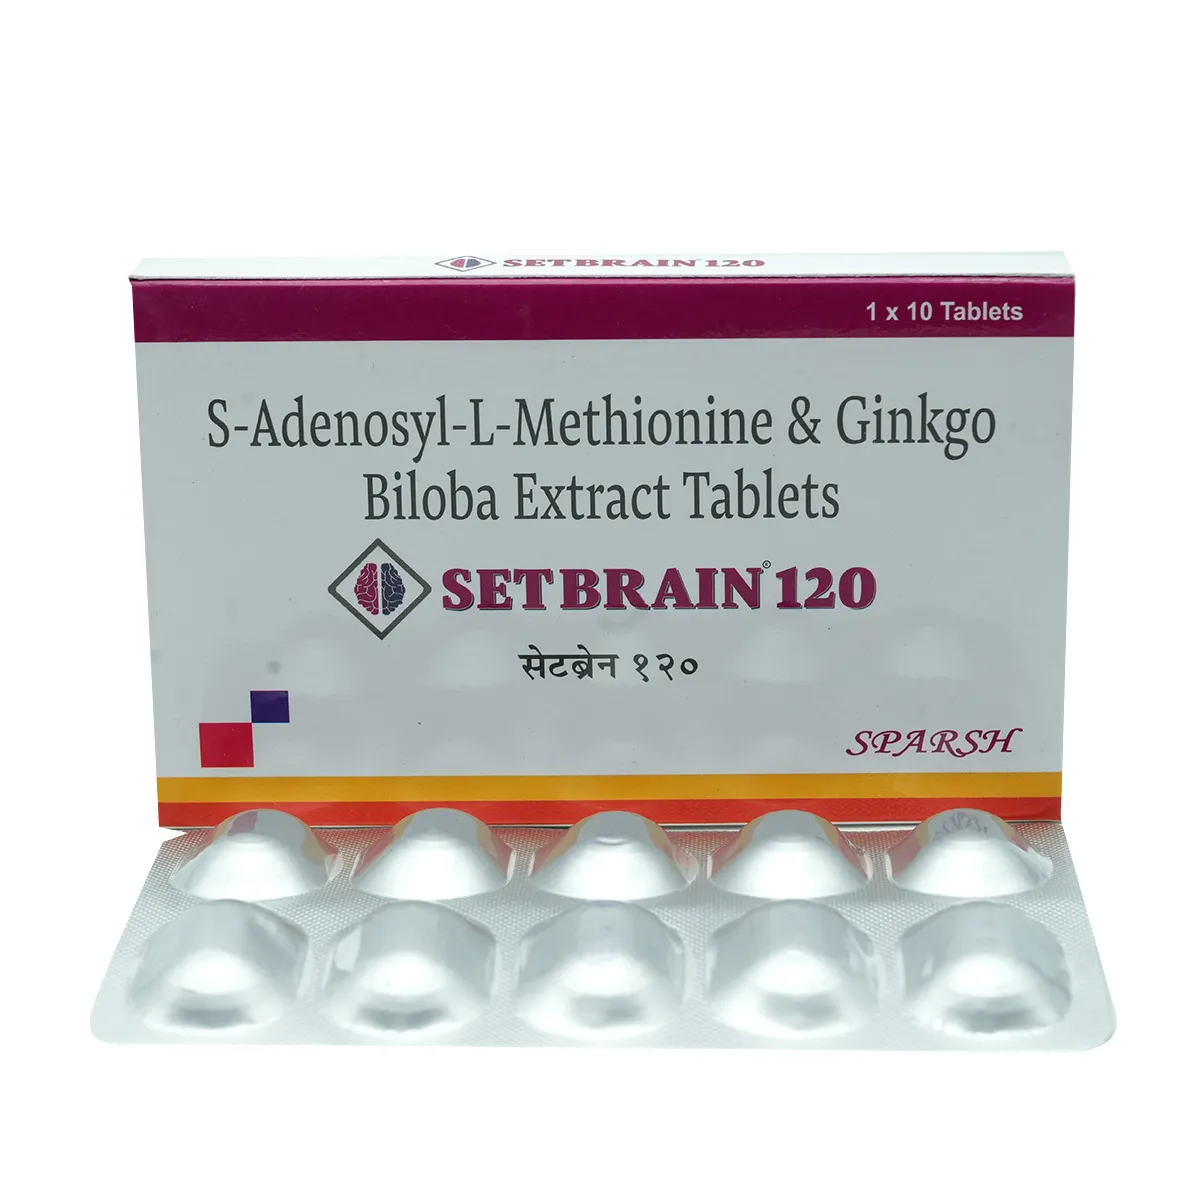 Setbrain 120 Tablet with S-Adenosyl-L-Methionine & Ginkgo Biloba Extract